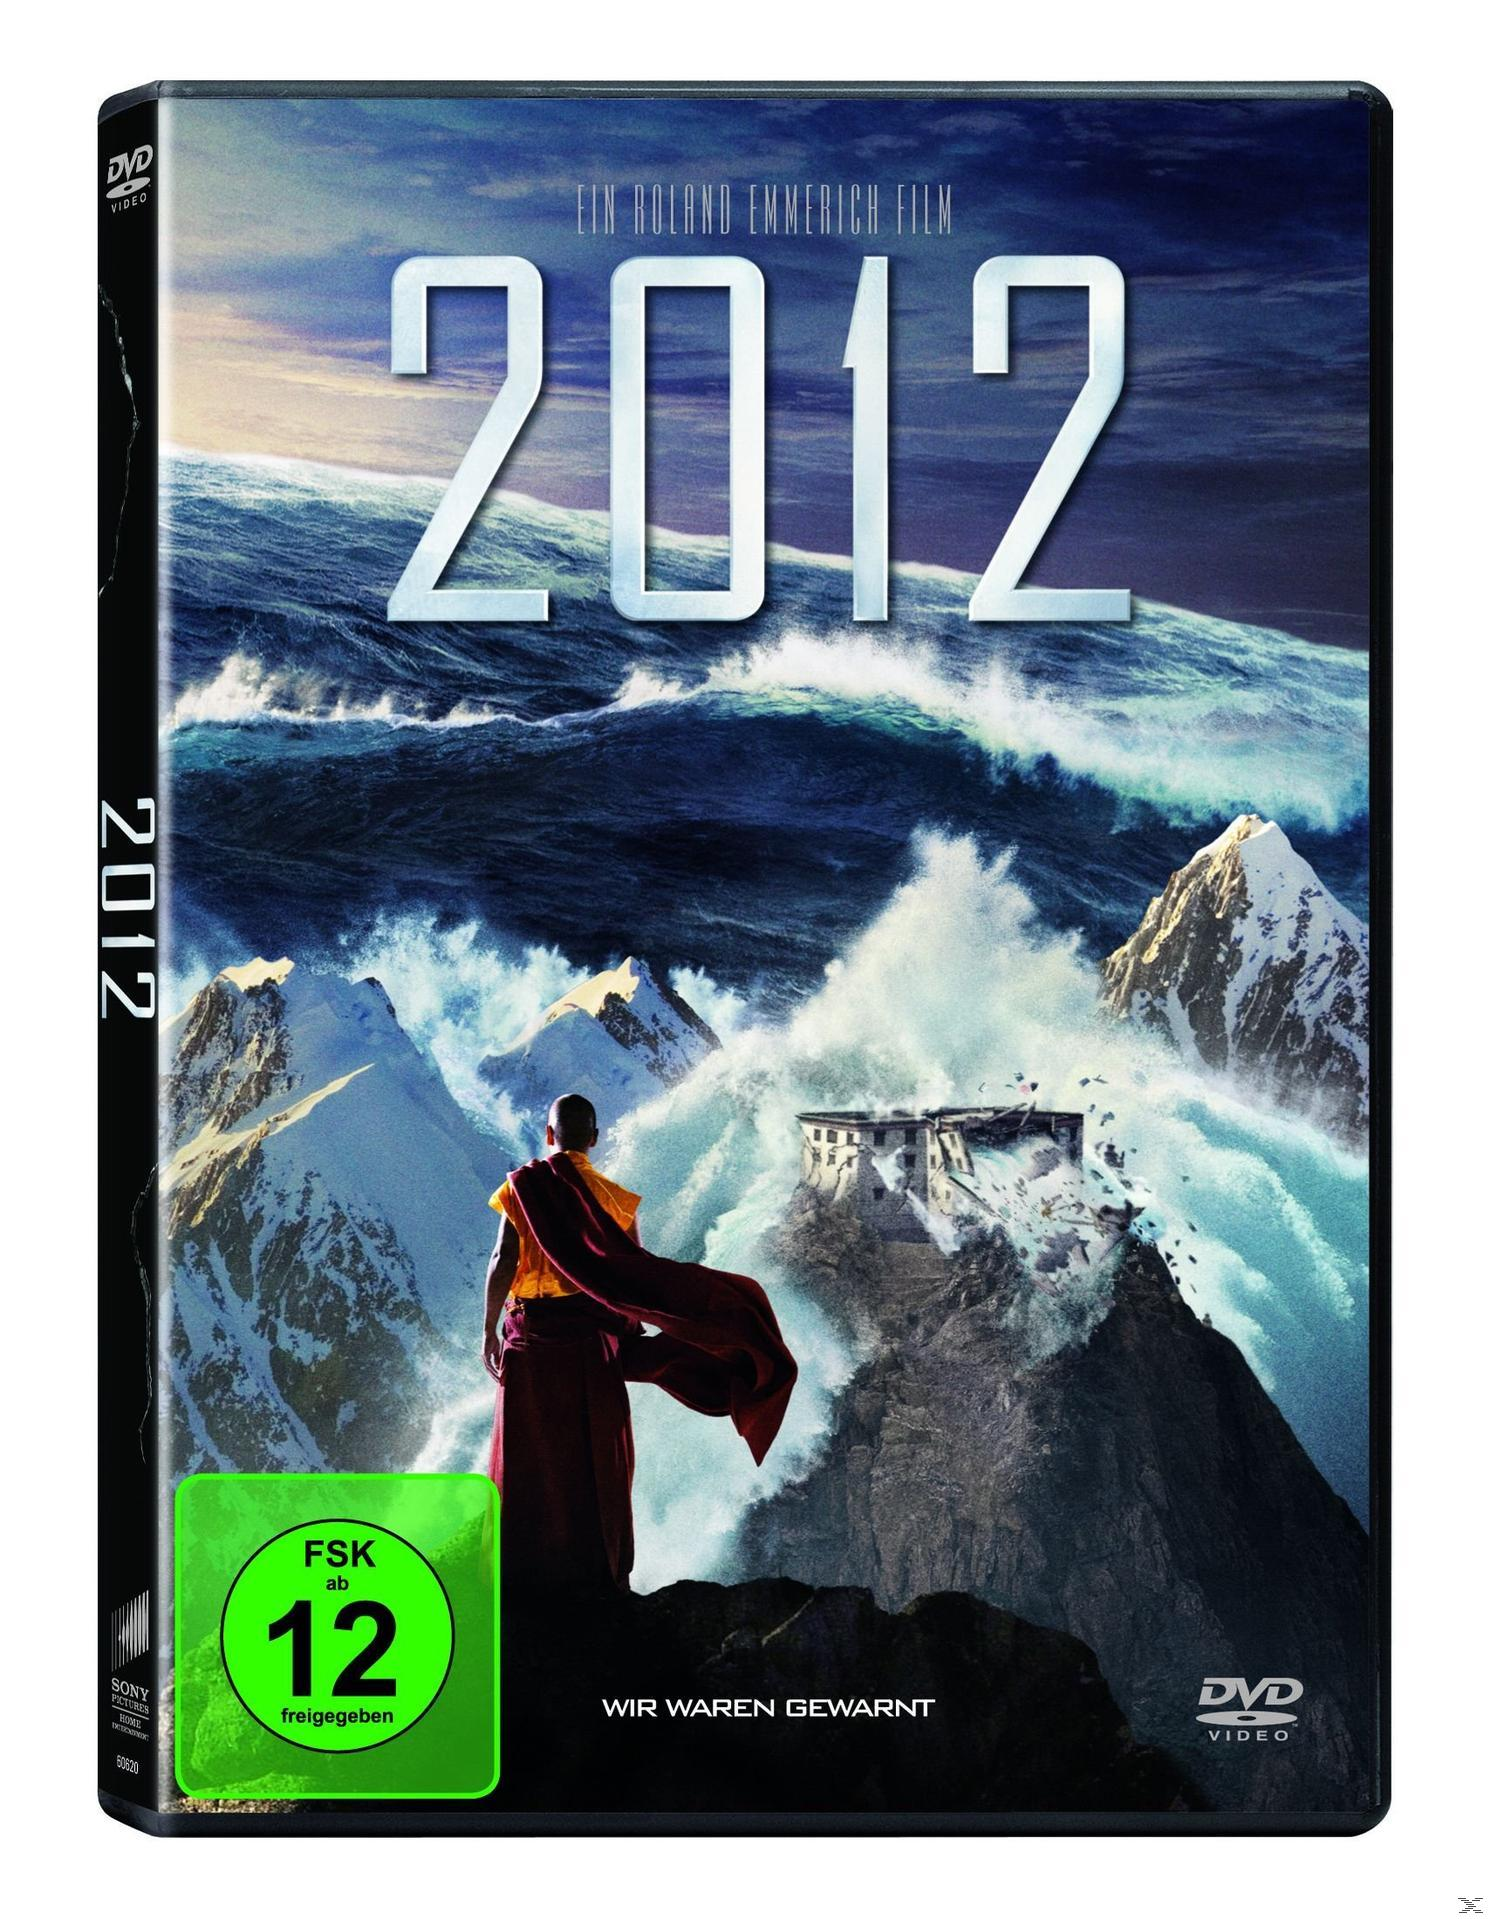 DVD 2012